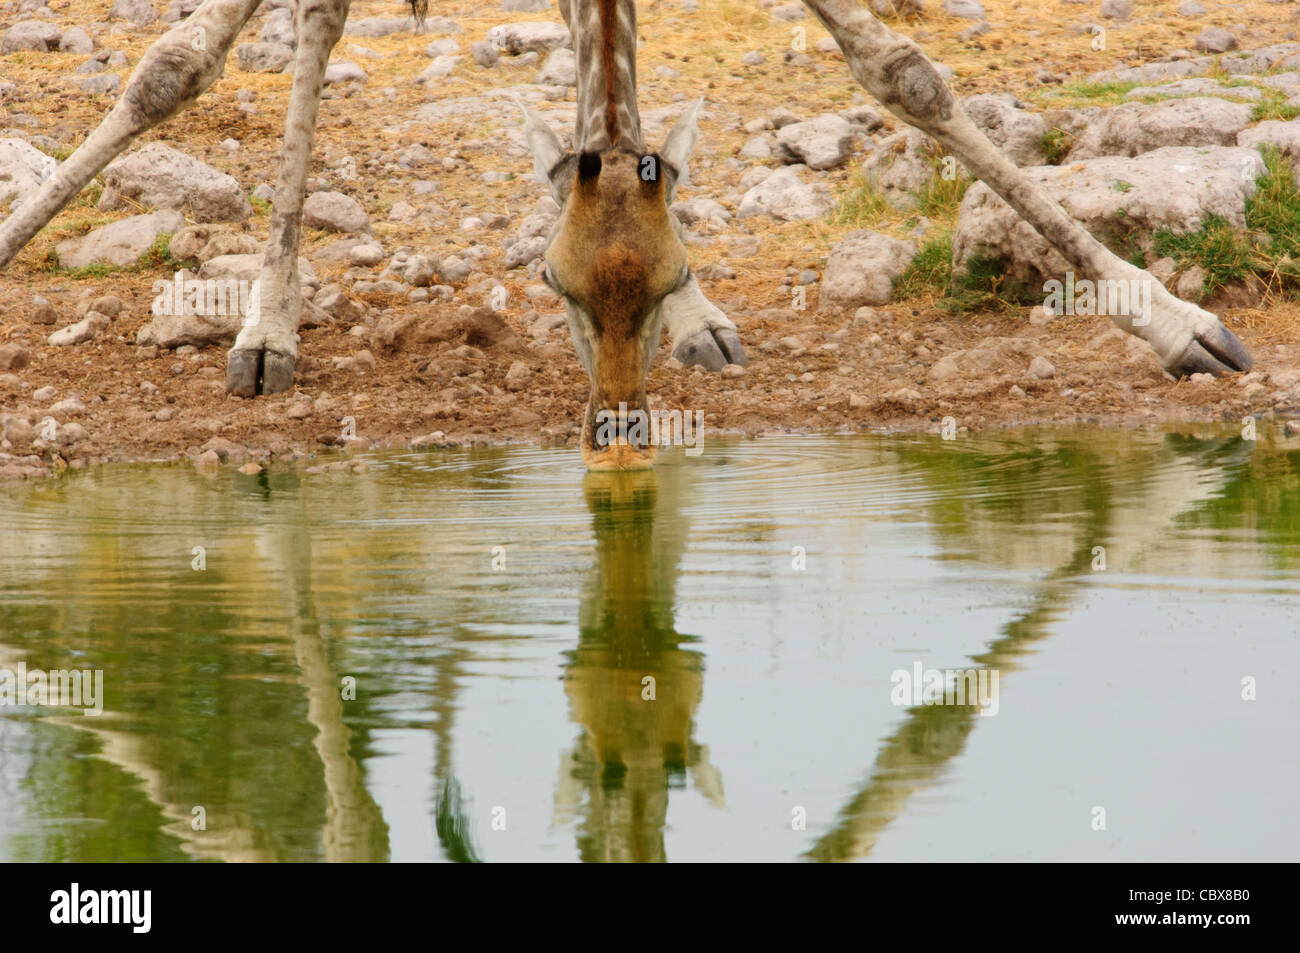 Close up of drinking giraffe at a water hole. Etosha National Park, Namibia. Stock Photo